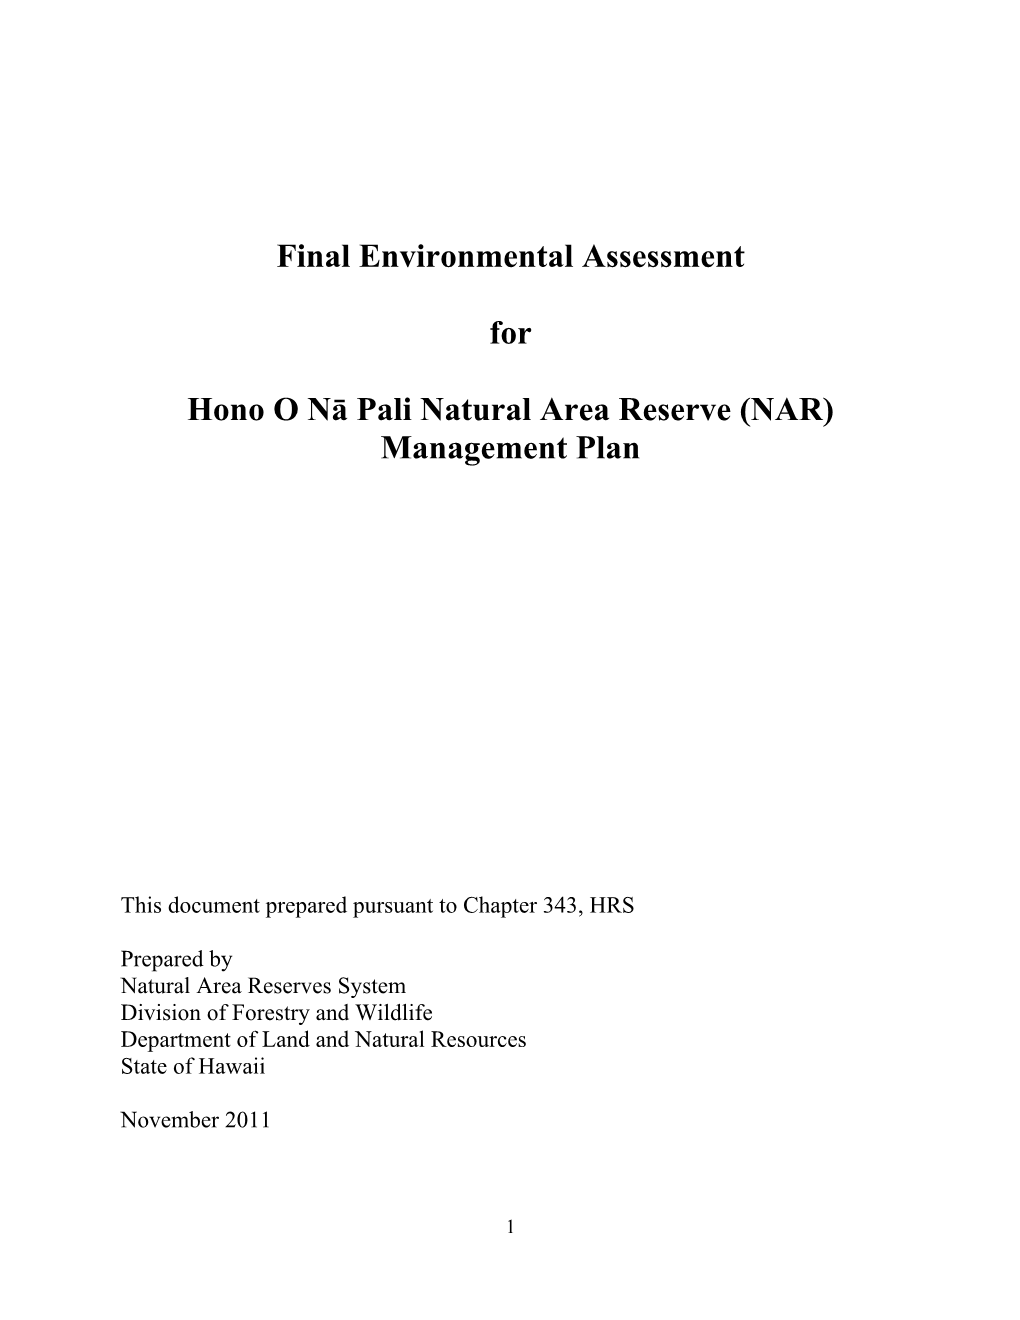 Hono O Nā Pali Environmental Assessment